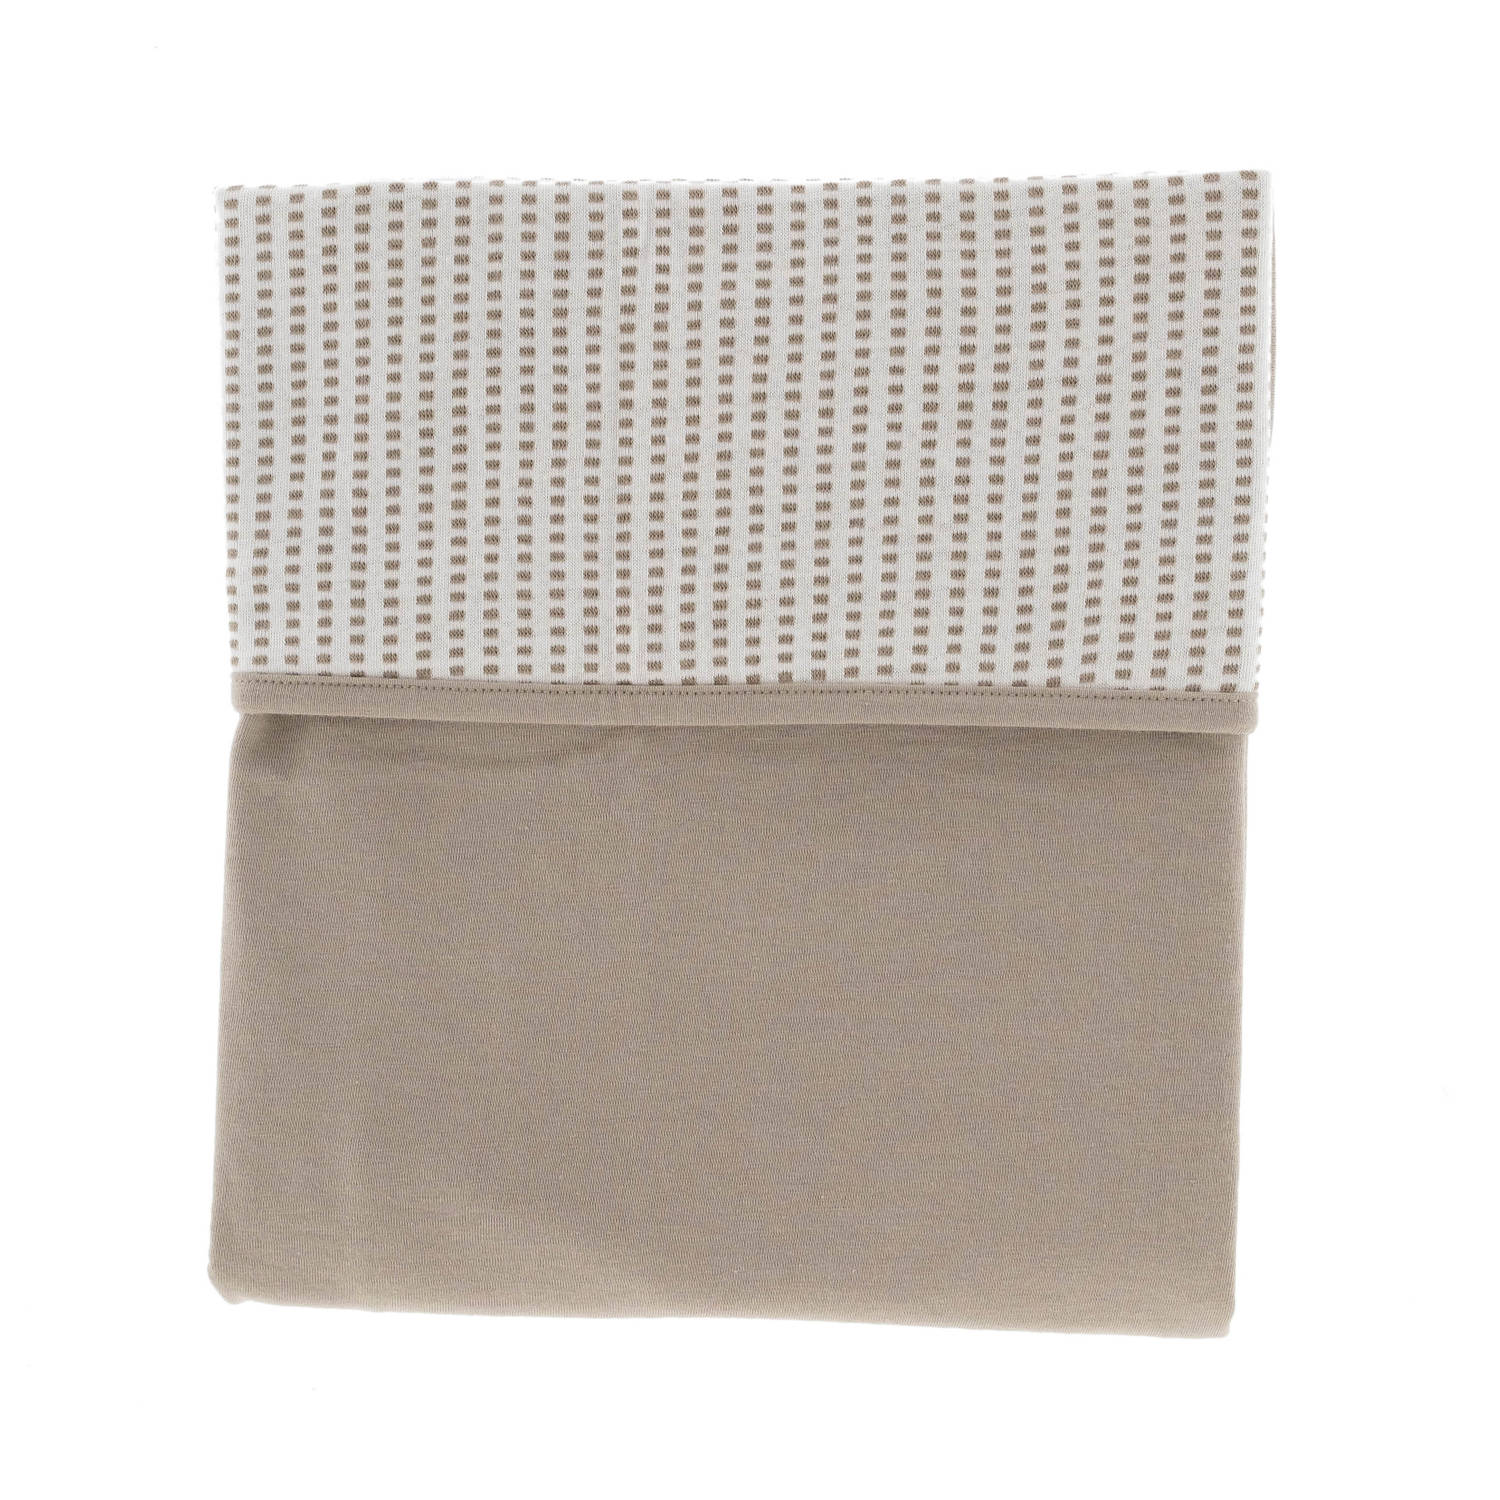 Snoozebaby Organic Blanket Cot T.o.g. 1.0 Warm Brown 100x150cm